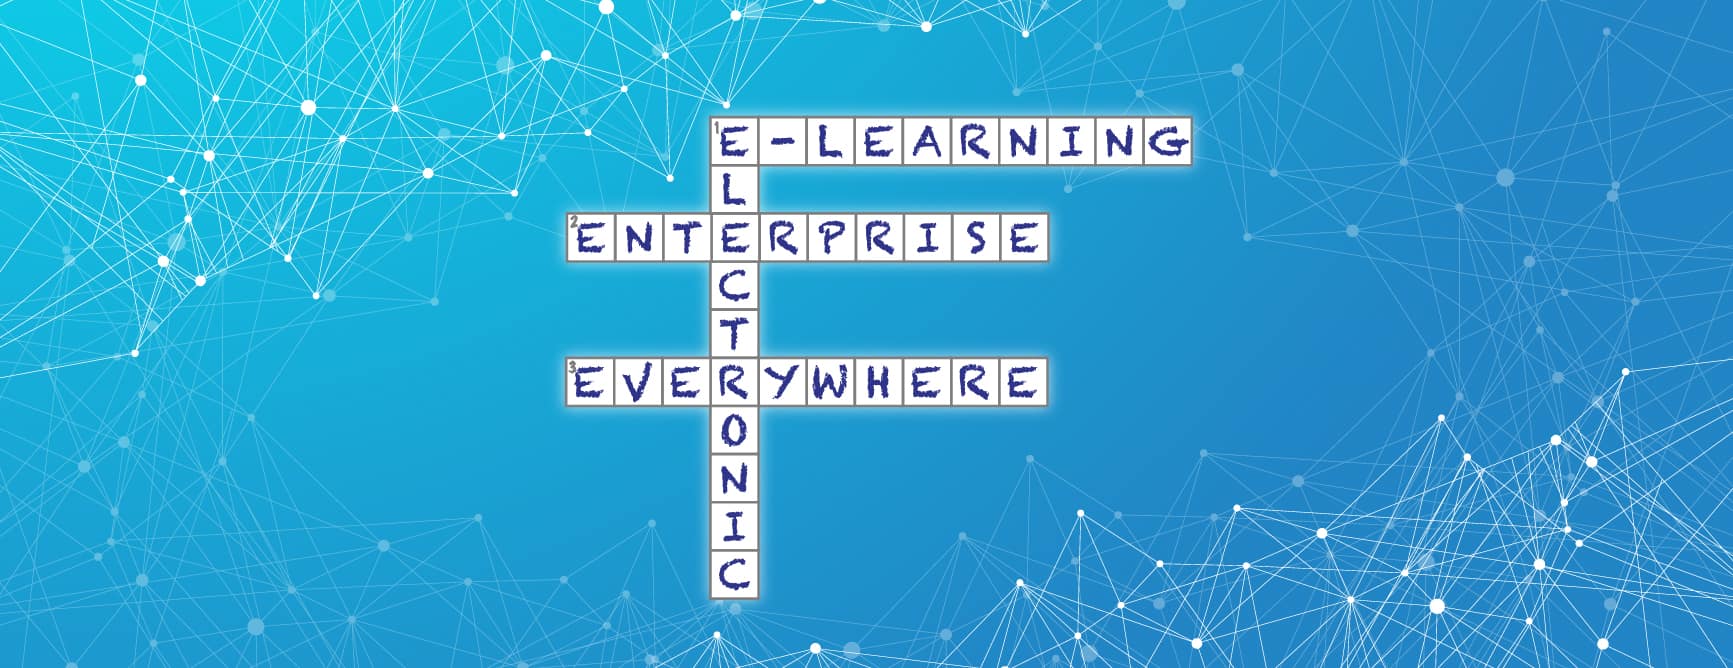 Enterprise Electronic Everywhere